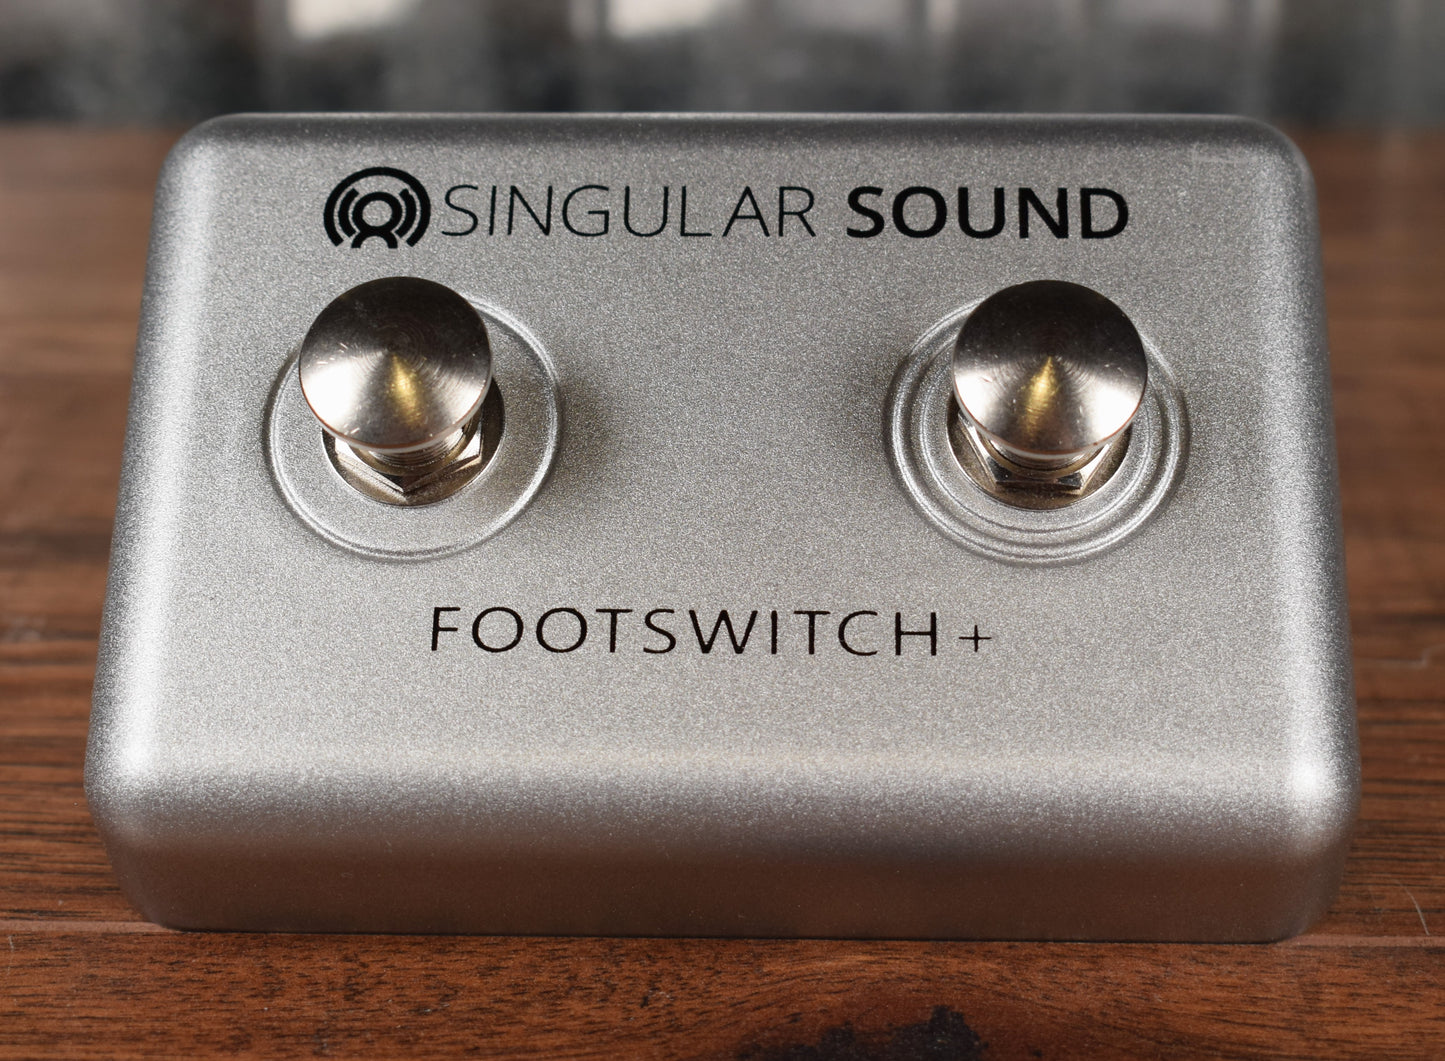 Singular Sound BeatBuddy Drum Machine Guitar Effect Pedal & Dual Footswitch +